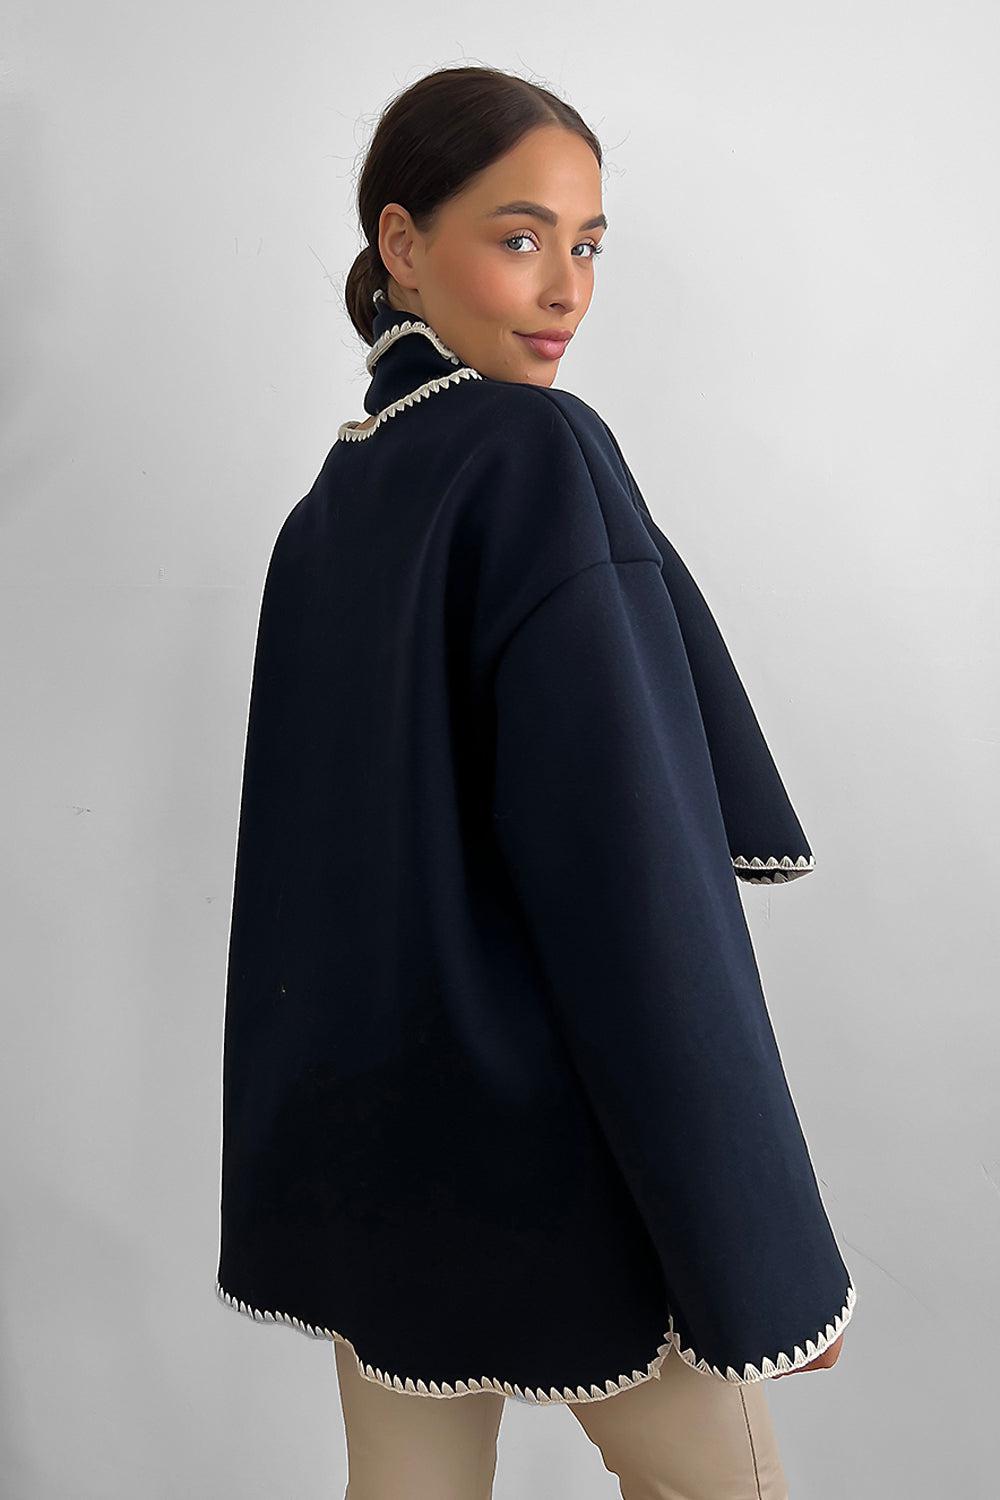 Contrast Stitch Felt Cardigan Coat With Scarf-SinglePrice